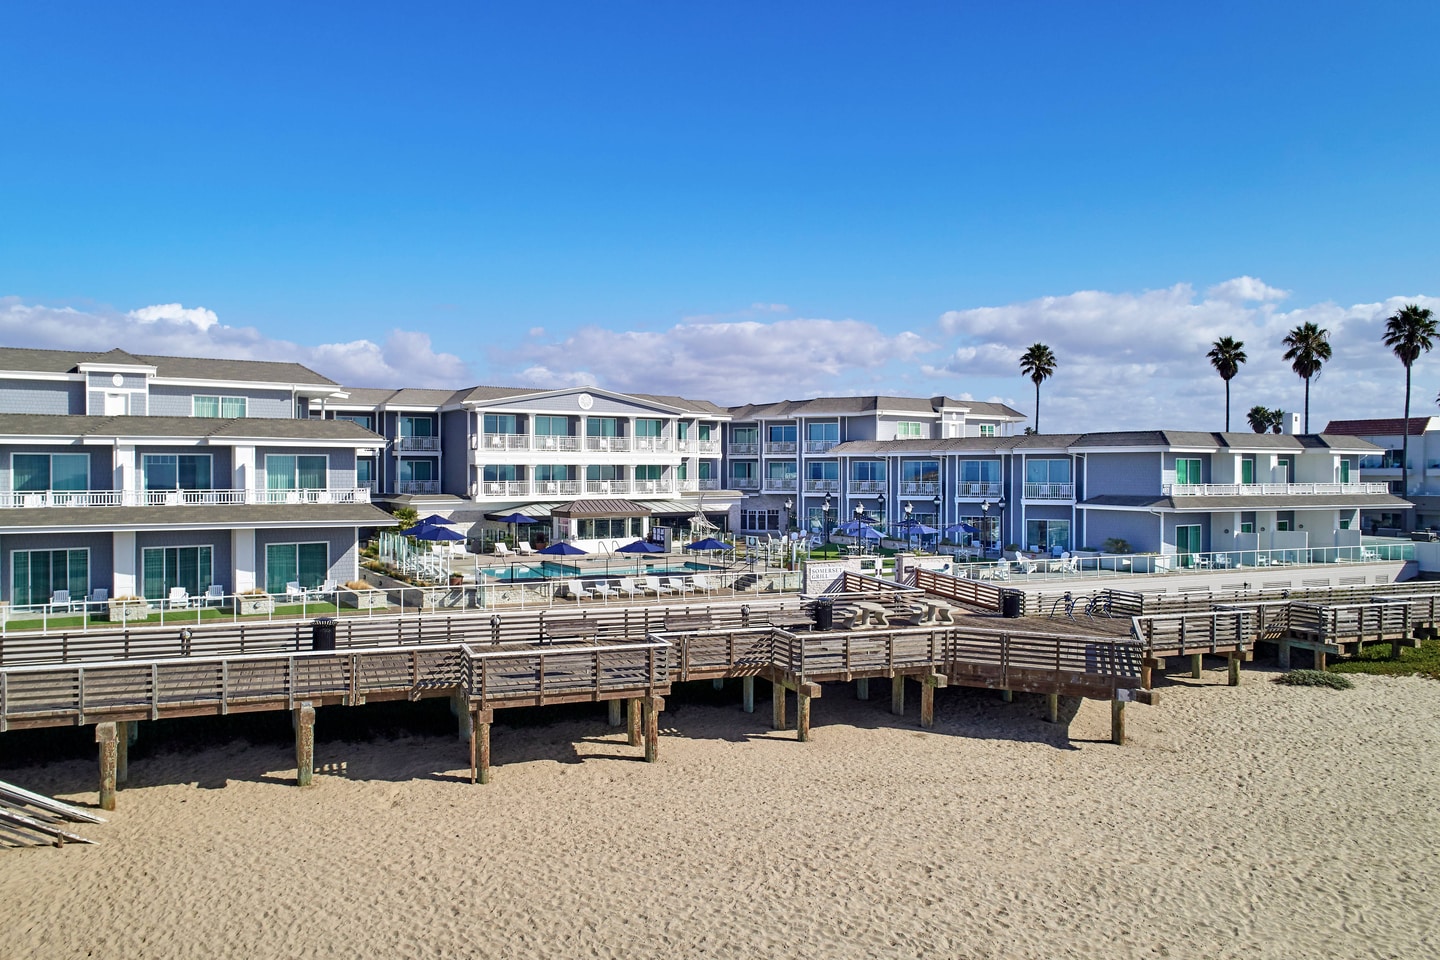 Best Marriott Beach Hotels & Resorts in California For Your Marriott Free Night Certificates